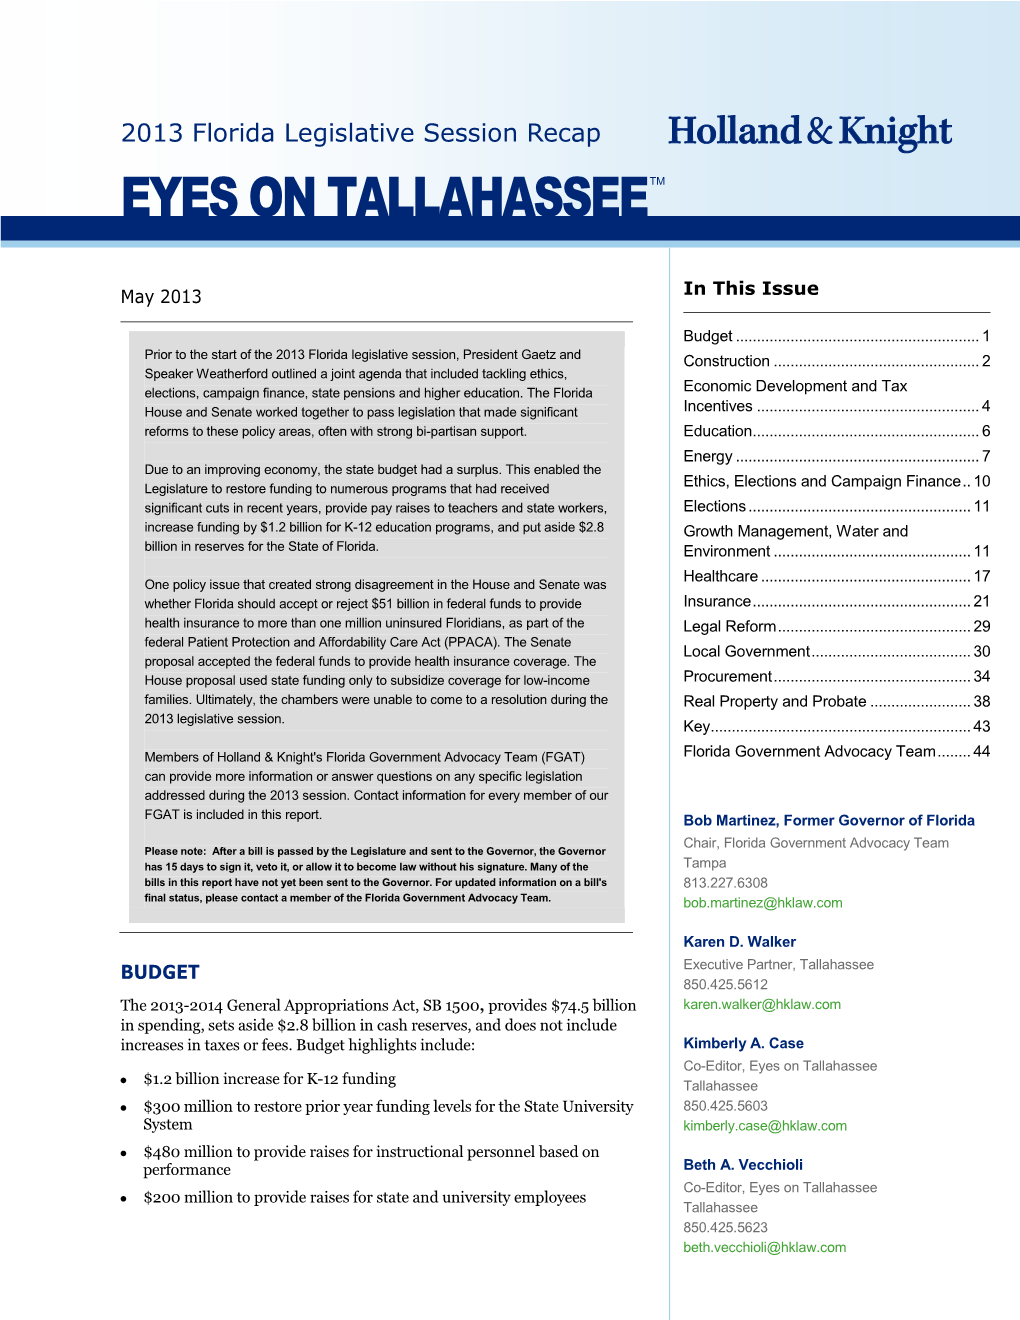 Eyes on Tallahasseetm